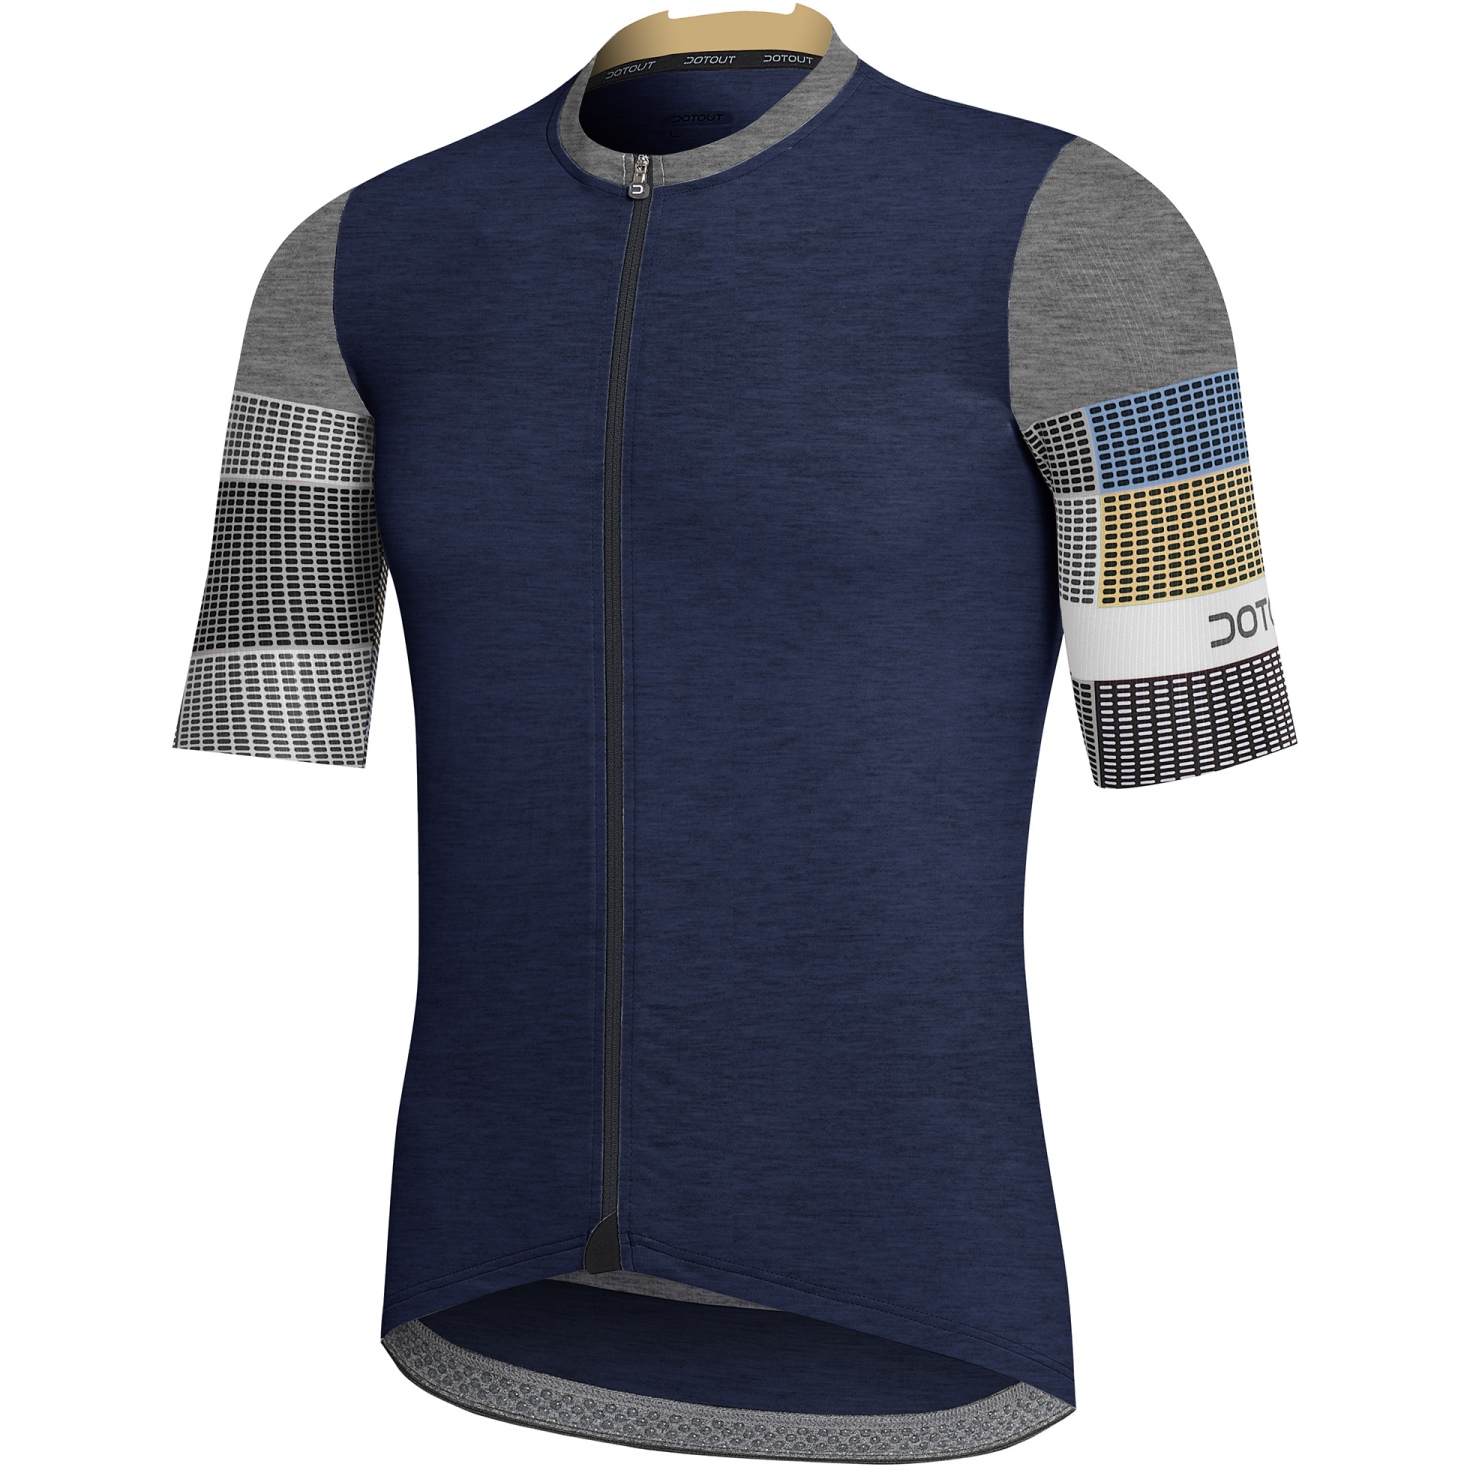 Productfoto van Dotout Stripe Fietsshirt Heren - melange blue